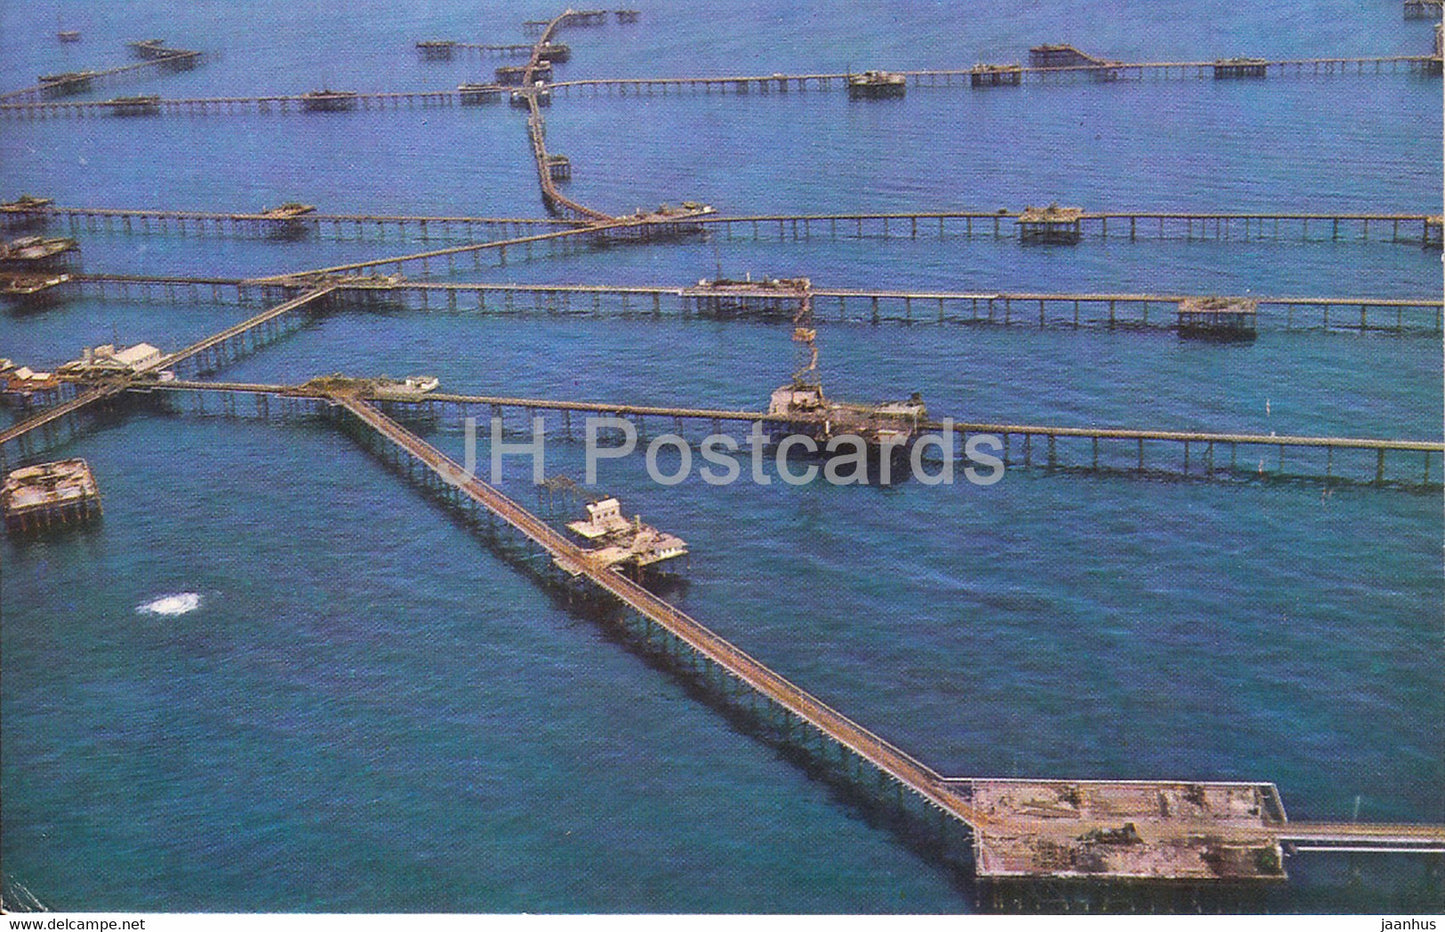 Baku - View of the Neftyanye Kamni oil works - 1970 - Azerbaijan USSR - unused - JH Postcards